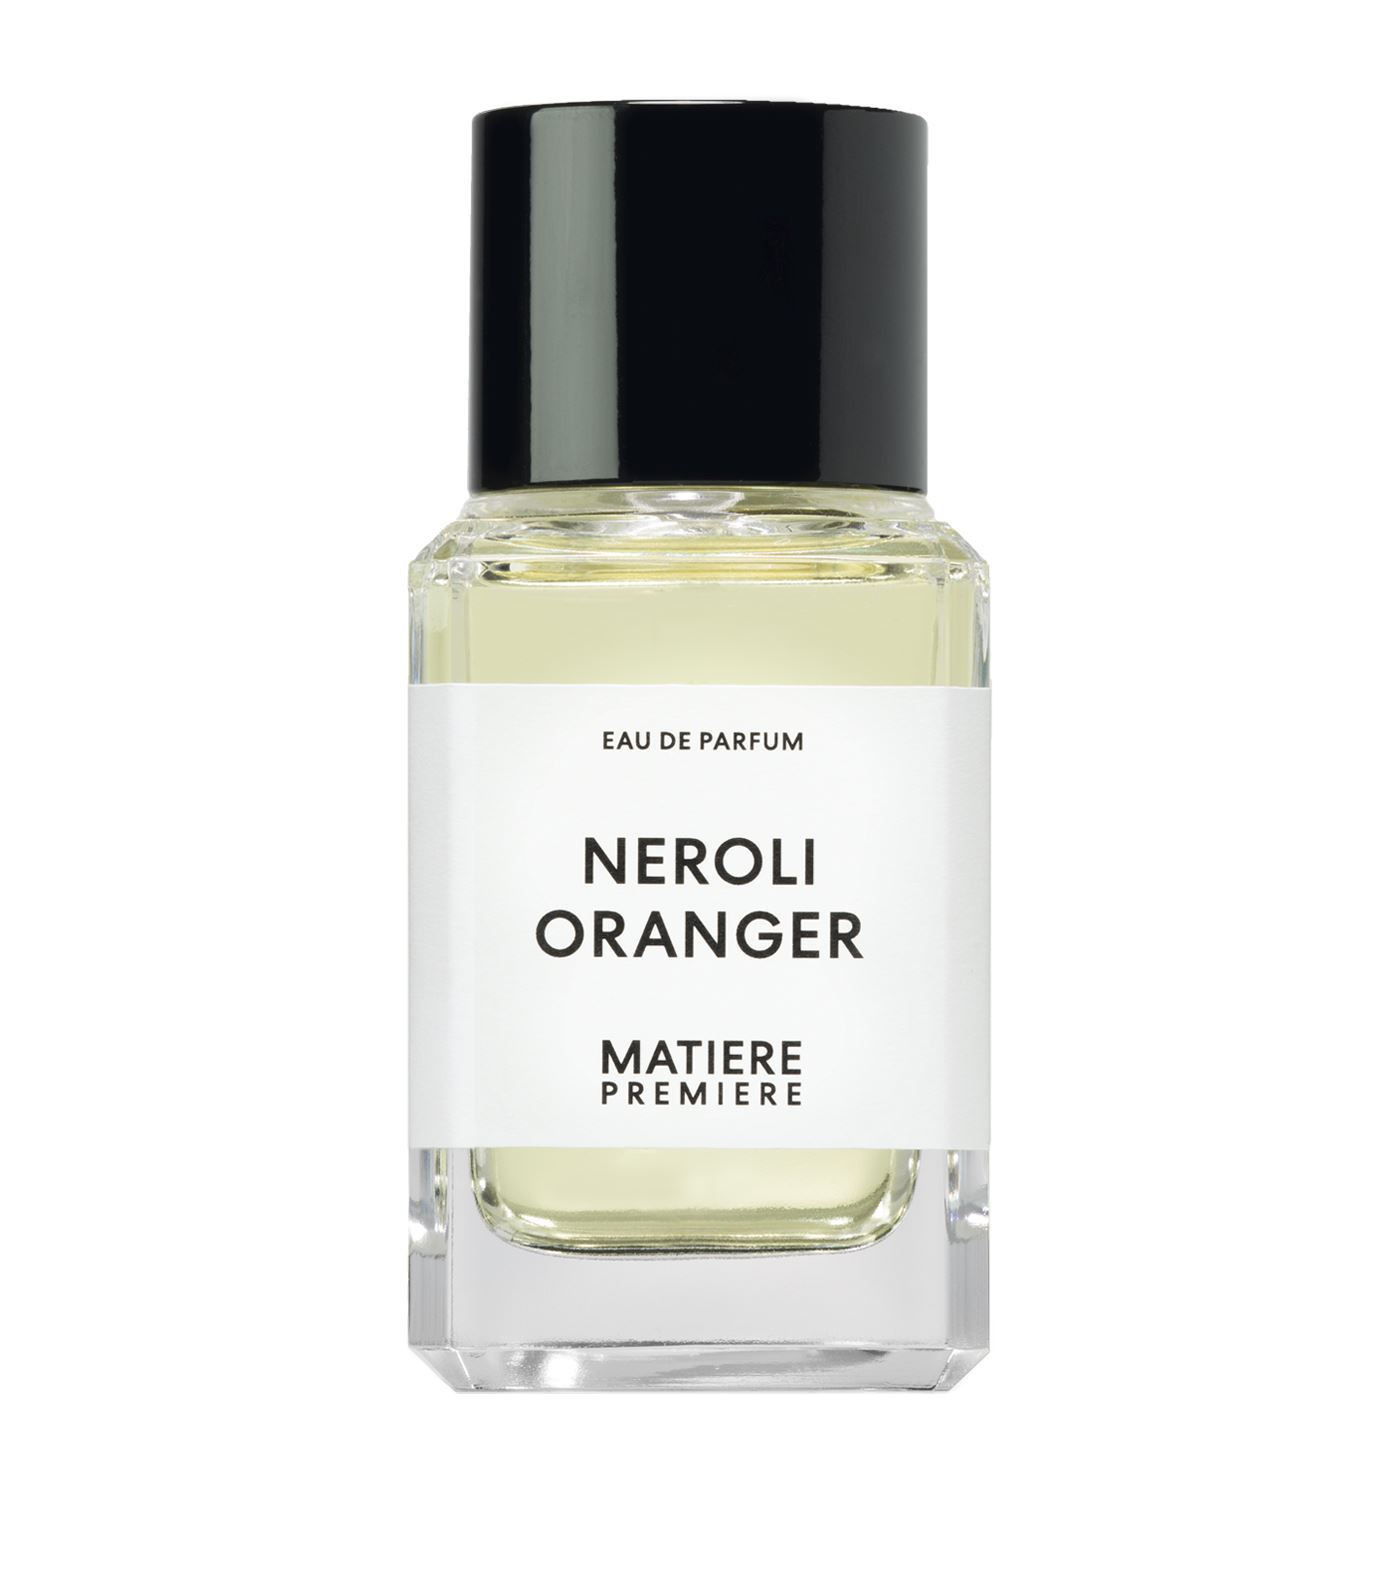 Neroli Oranger Matiere Premiere perfume - a fragrance for women and men ...